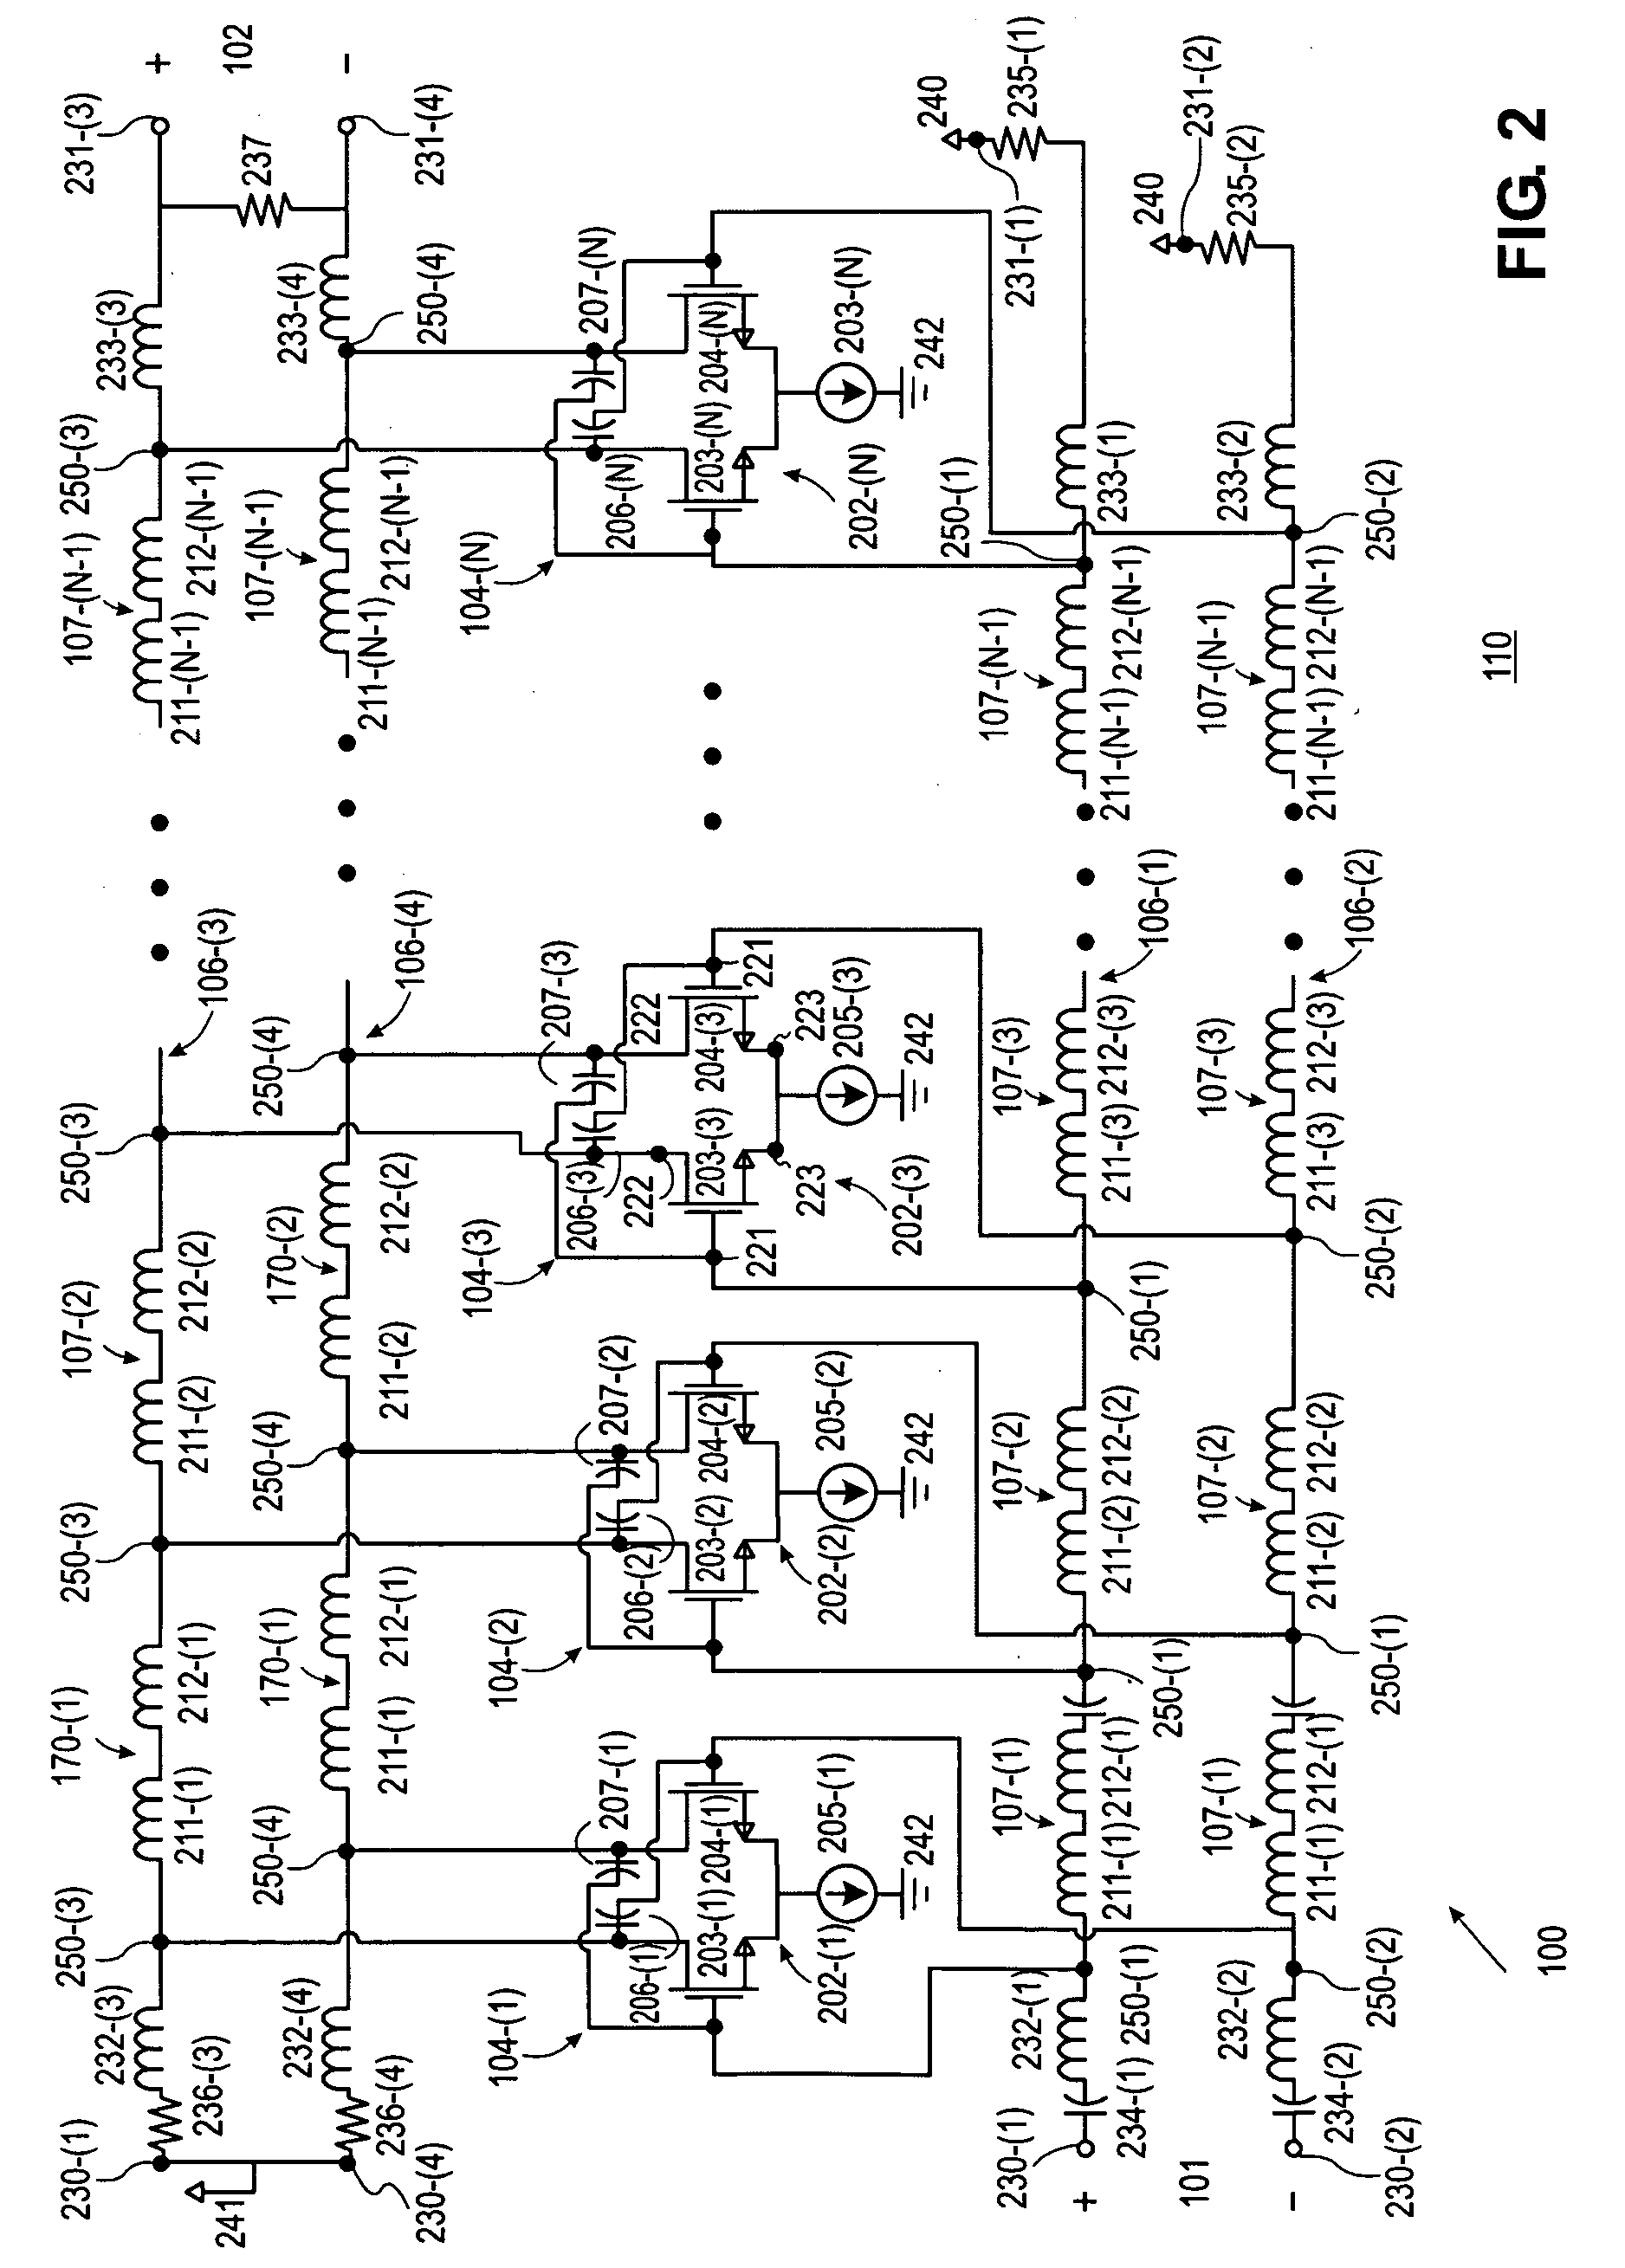 Non-uniform distributed multi-stage circuits